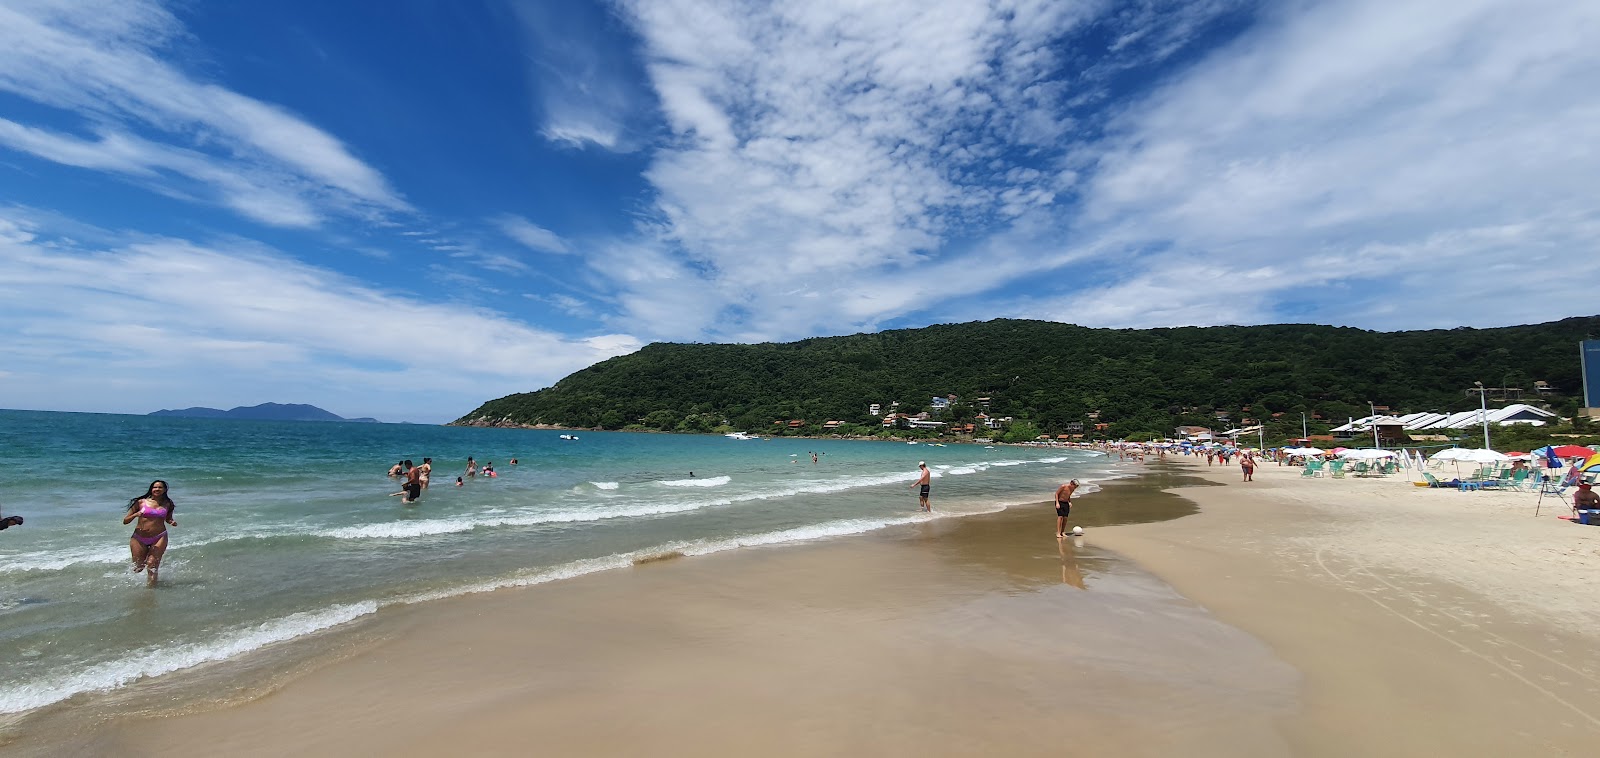 Fotografija Plaža Ponta das Canas z svetel fin pesek površino